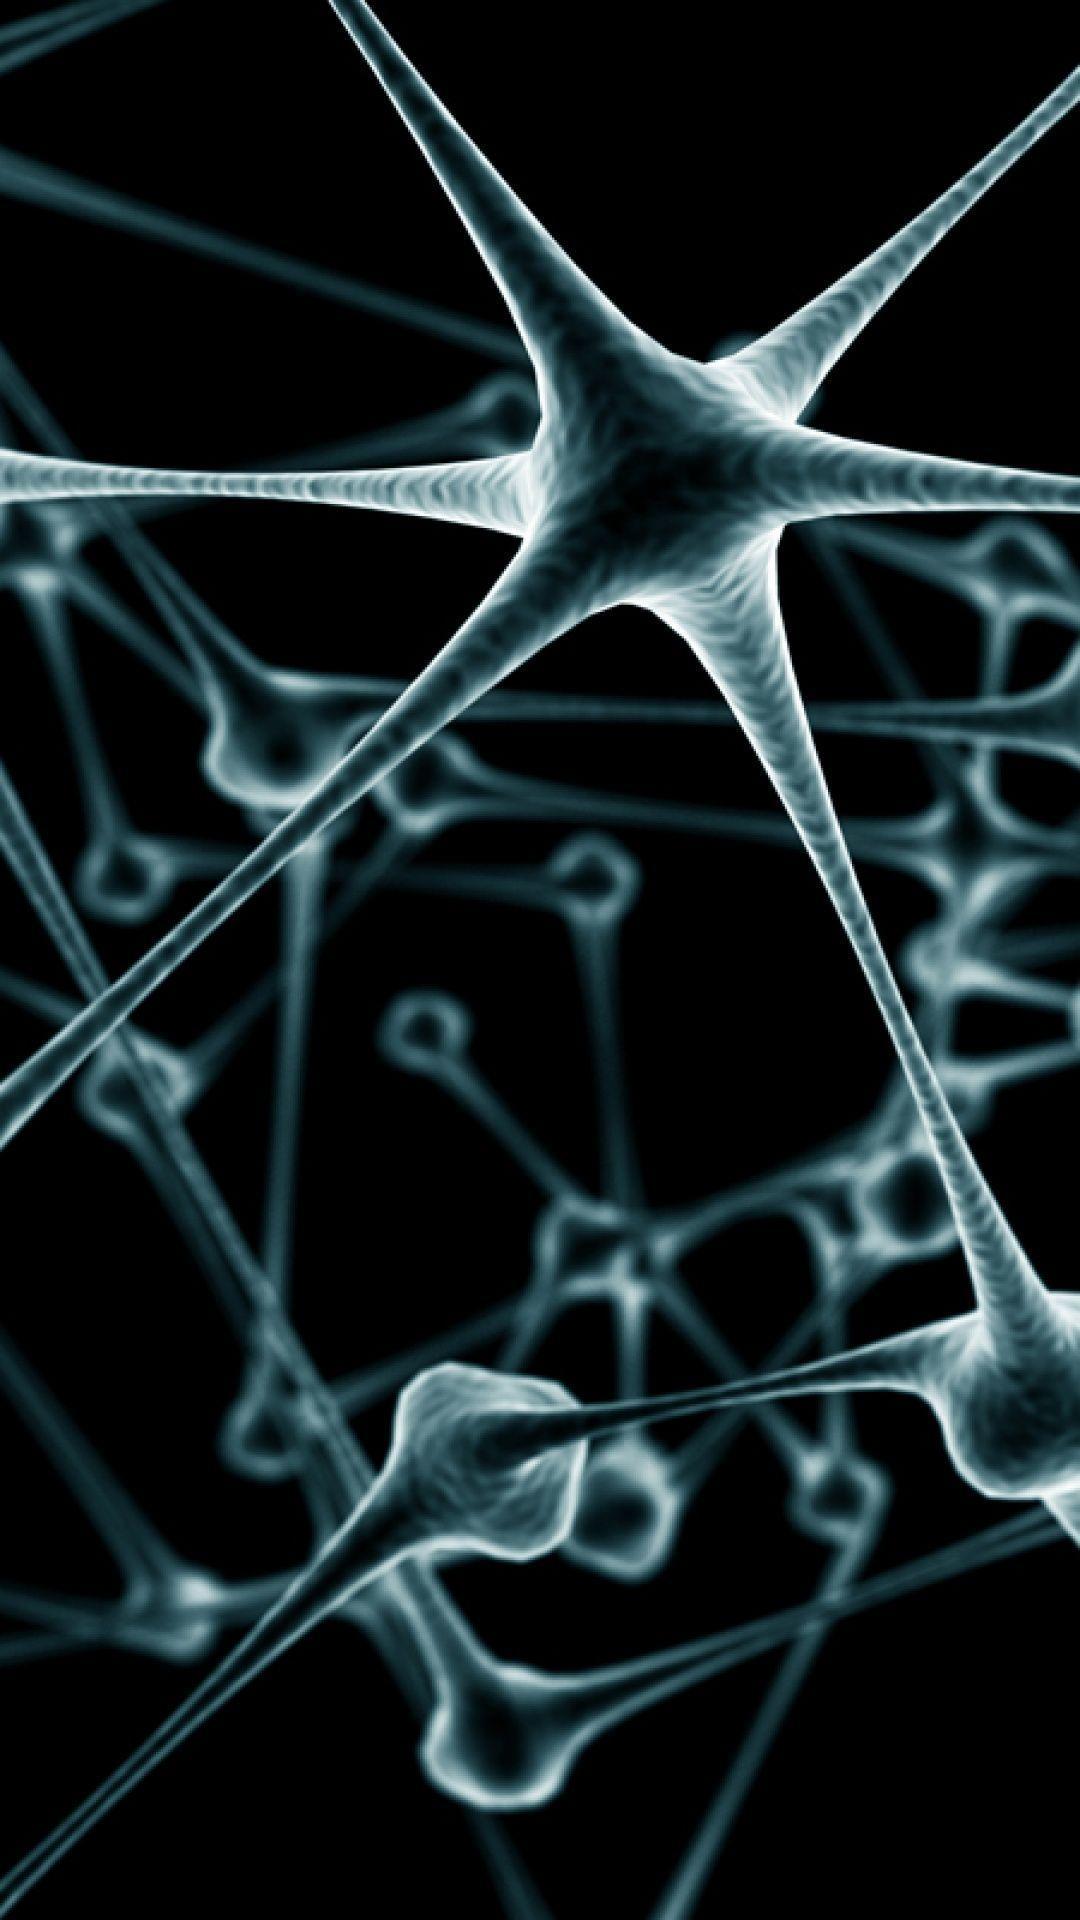 Neurons under a Microscope [1360 x 1024] : r/wallpaper